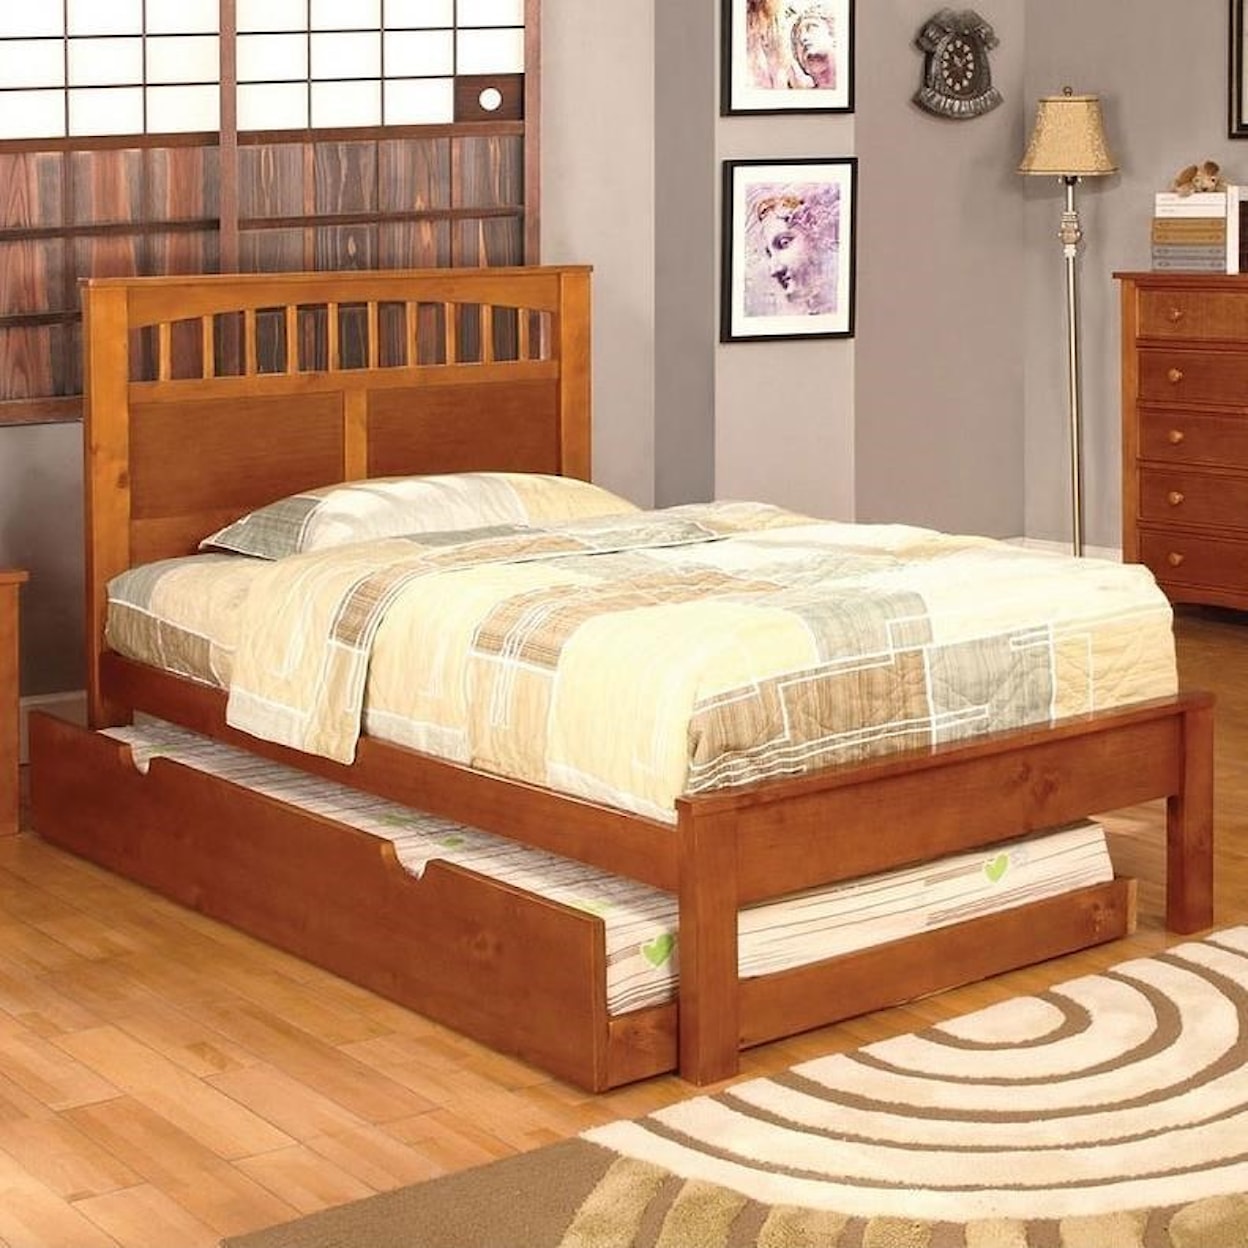 Furniture of America Carus Twin Bed